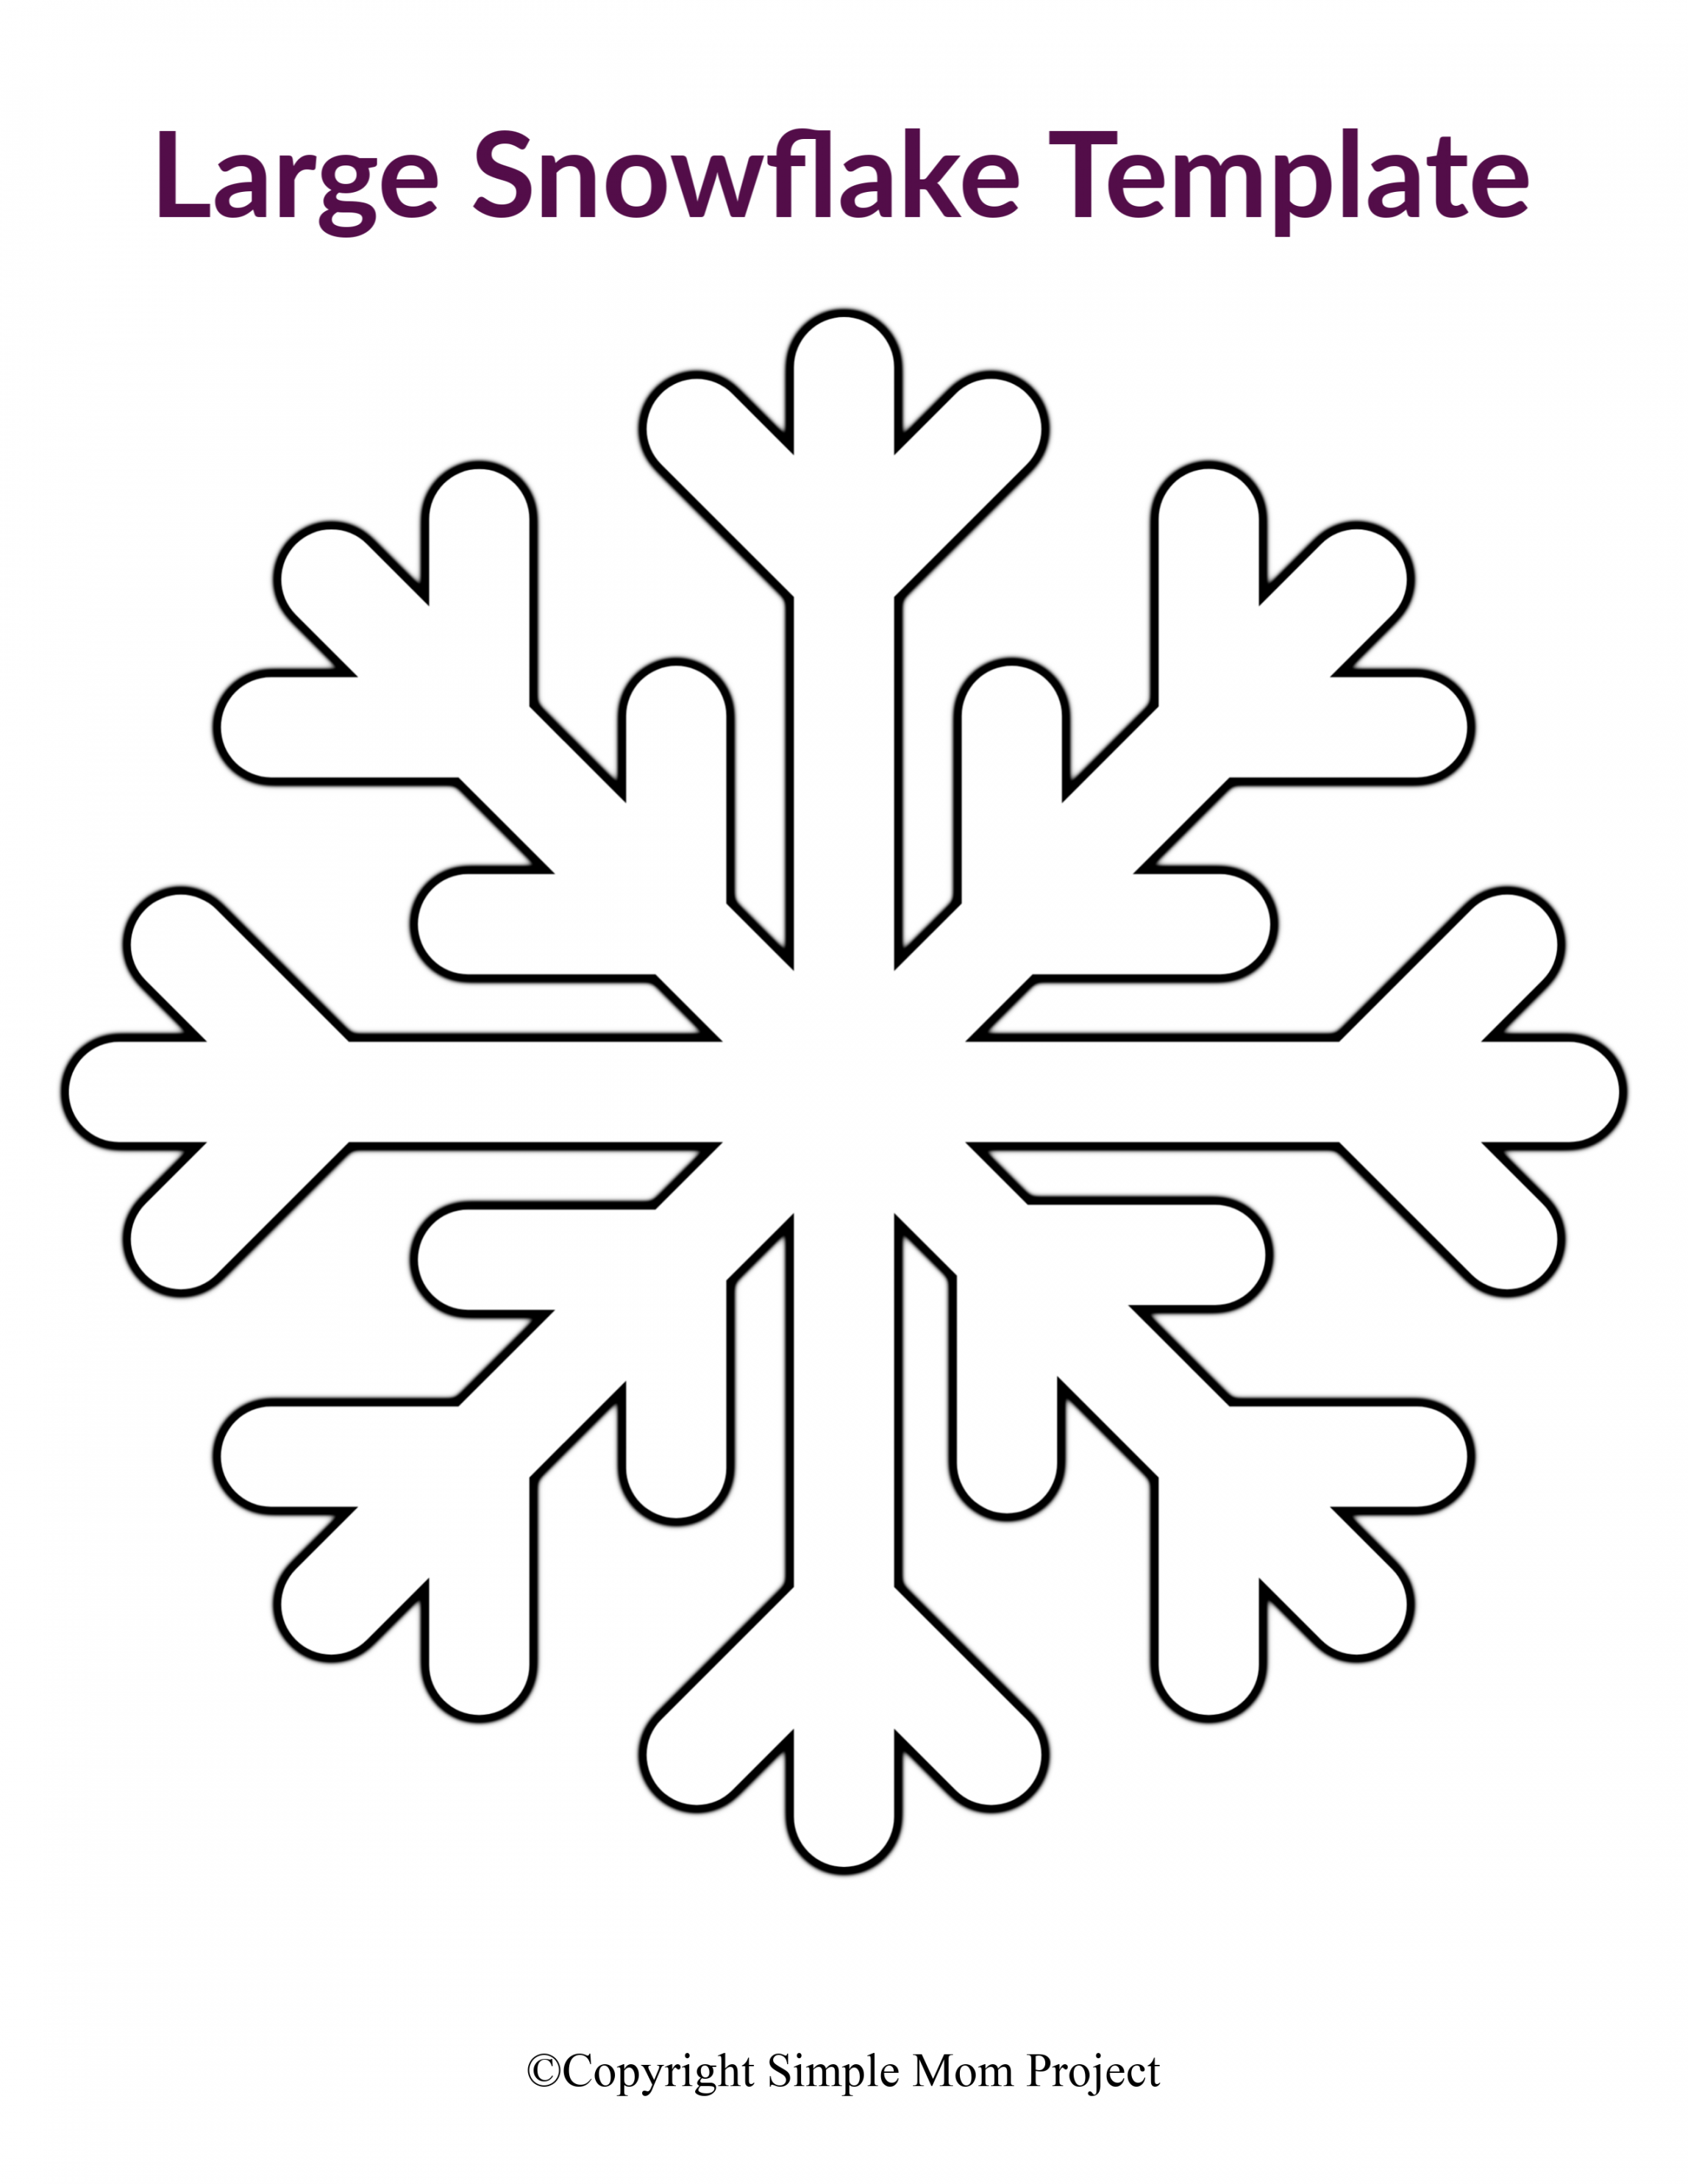 Free Printable Large Snowflake Templates - Simple Mom Project - FREE Printables - Free Printable Snowflakes